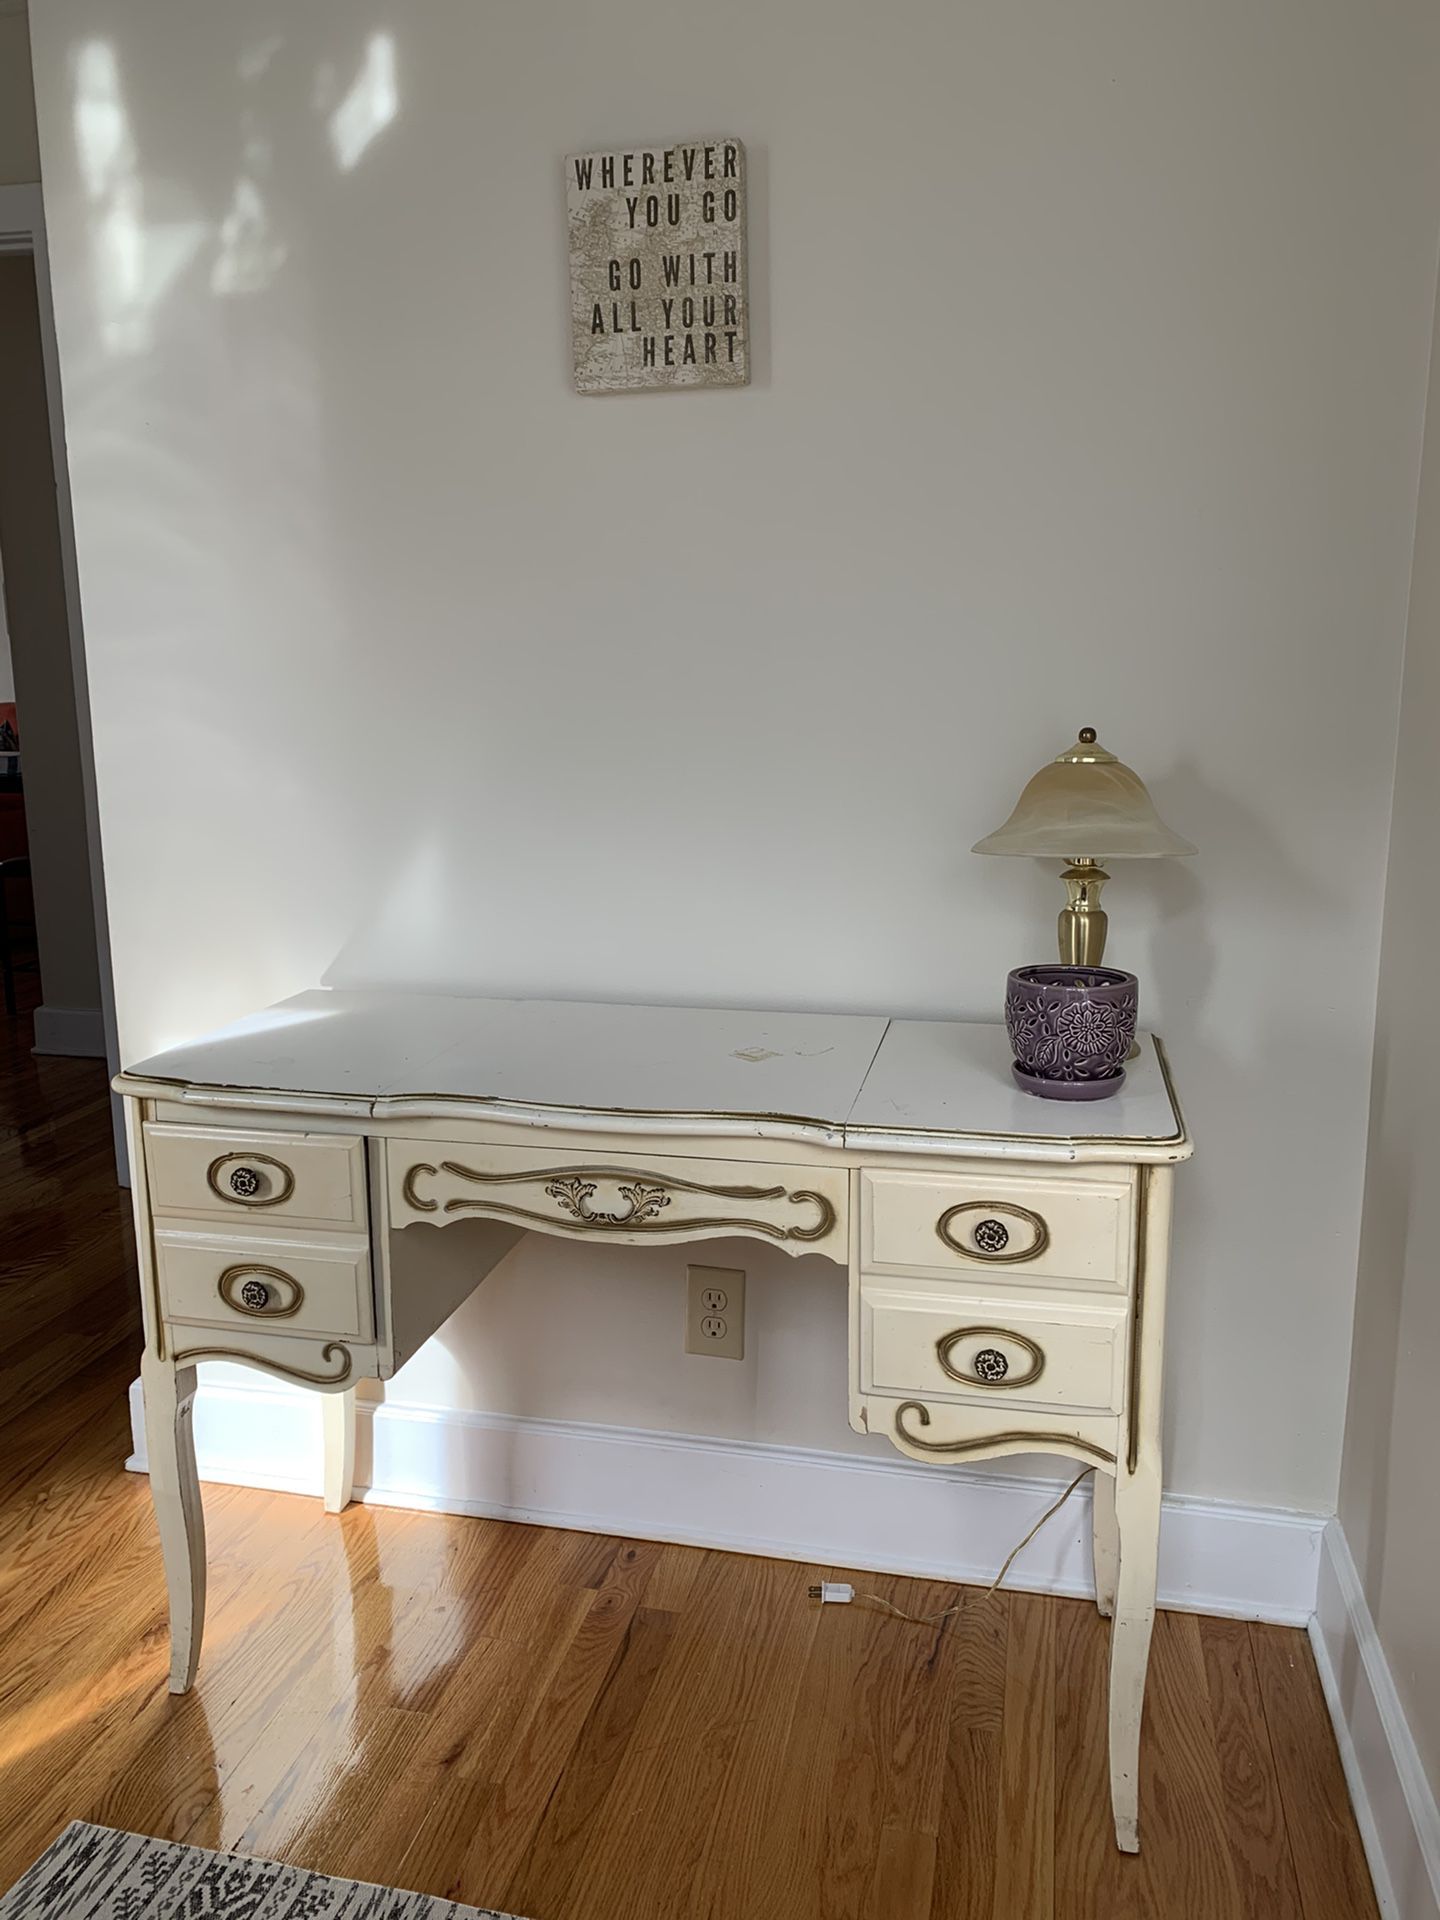 Beautiful antique desk or vanity